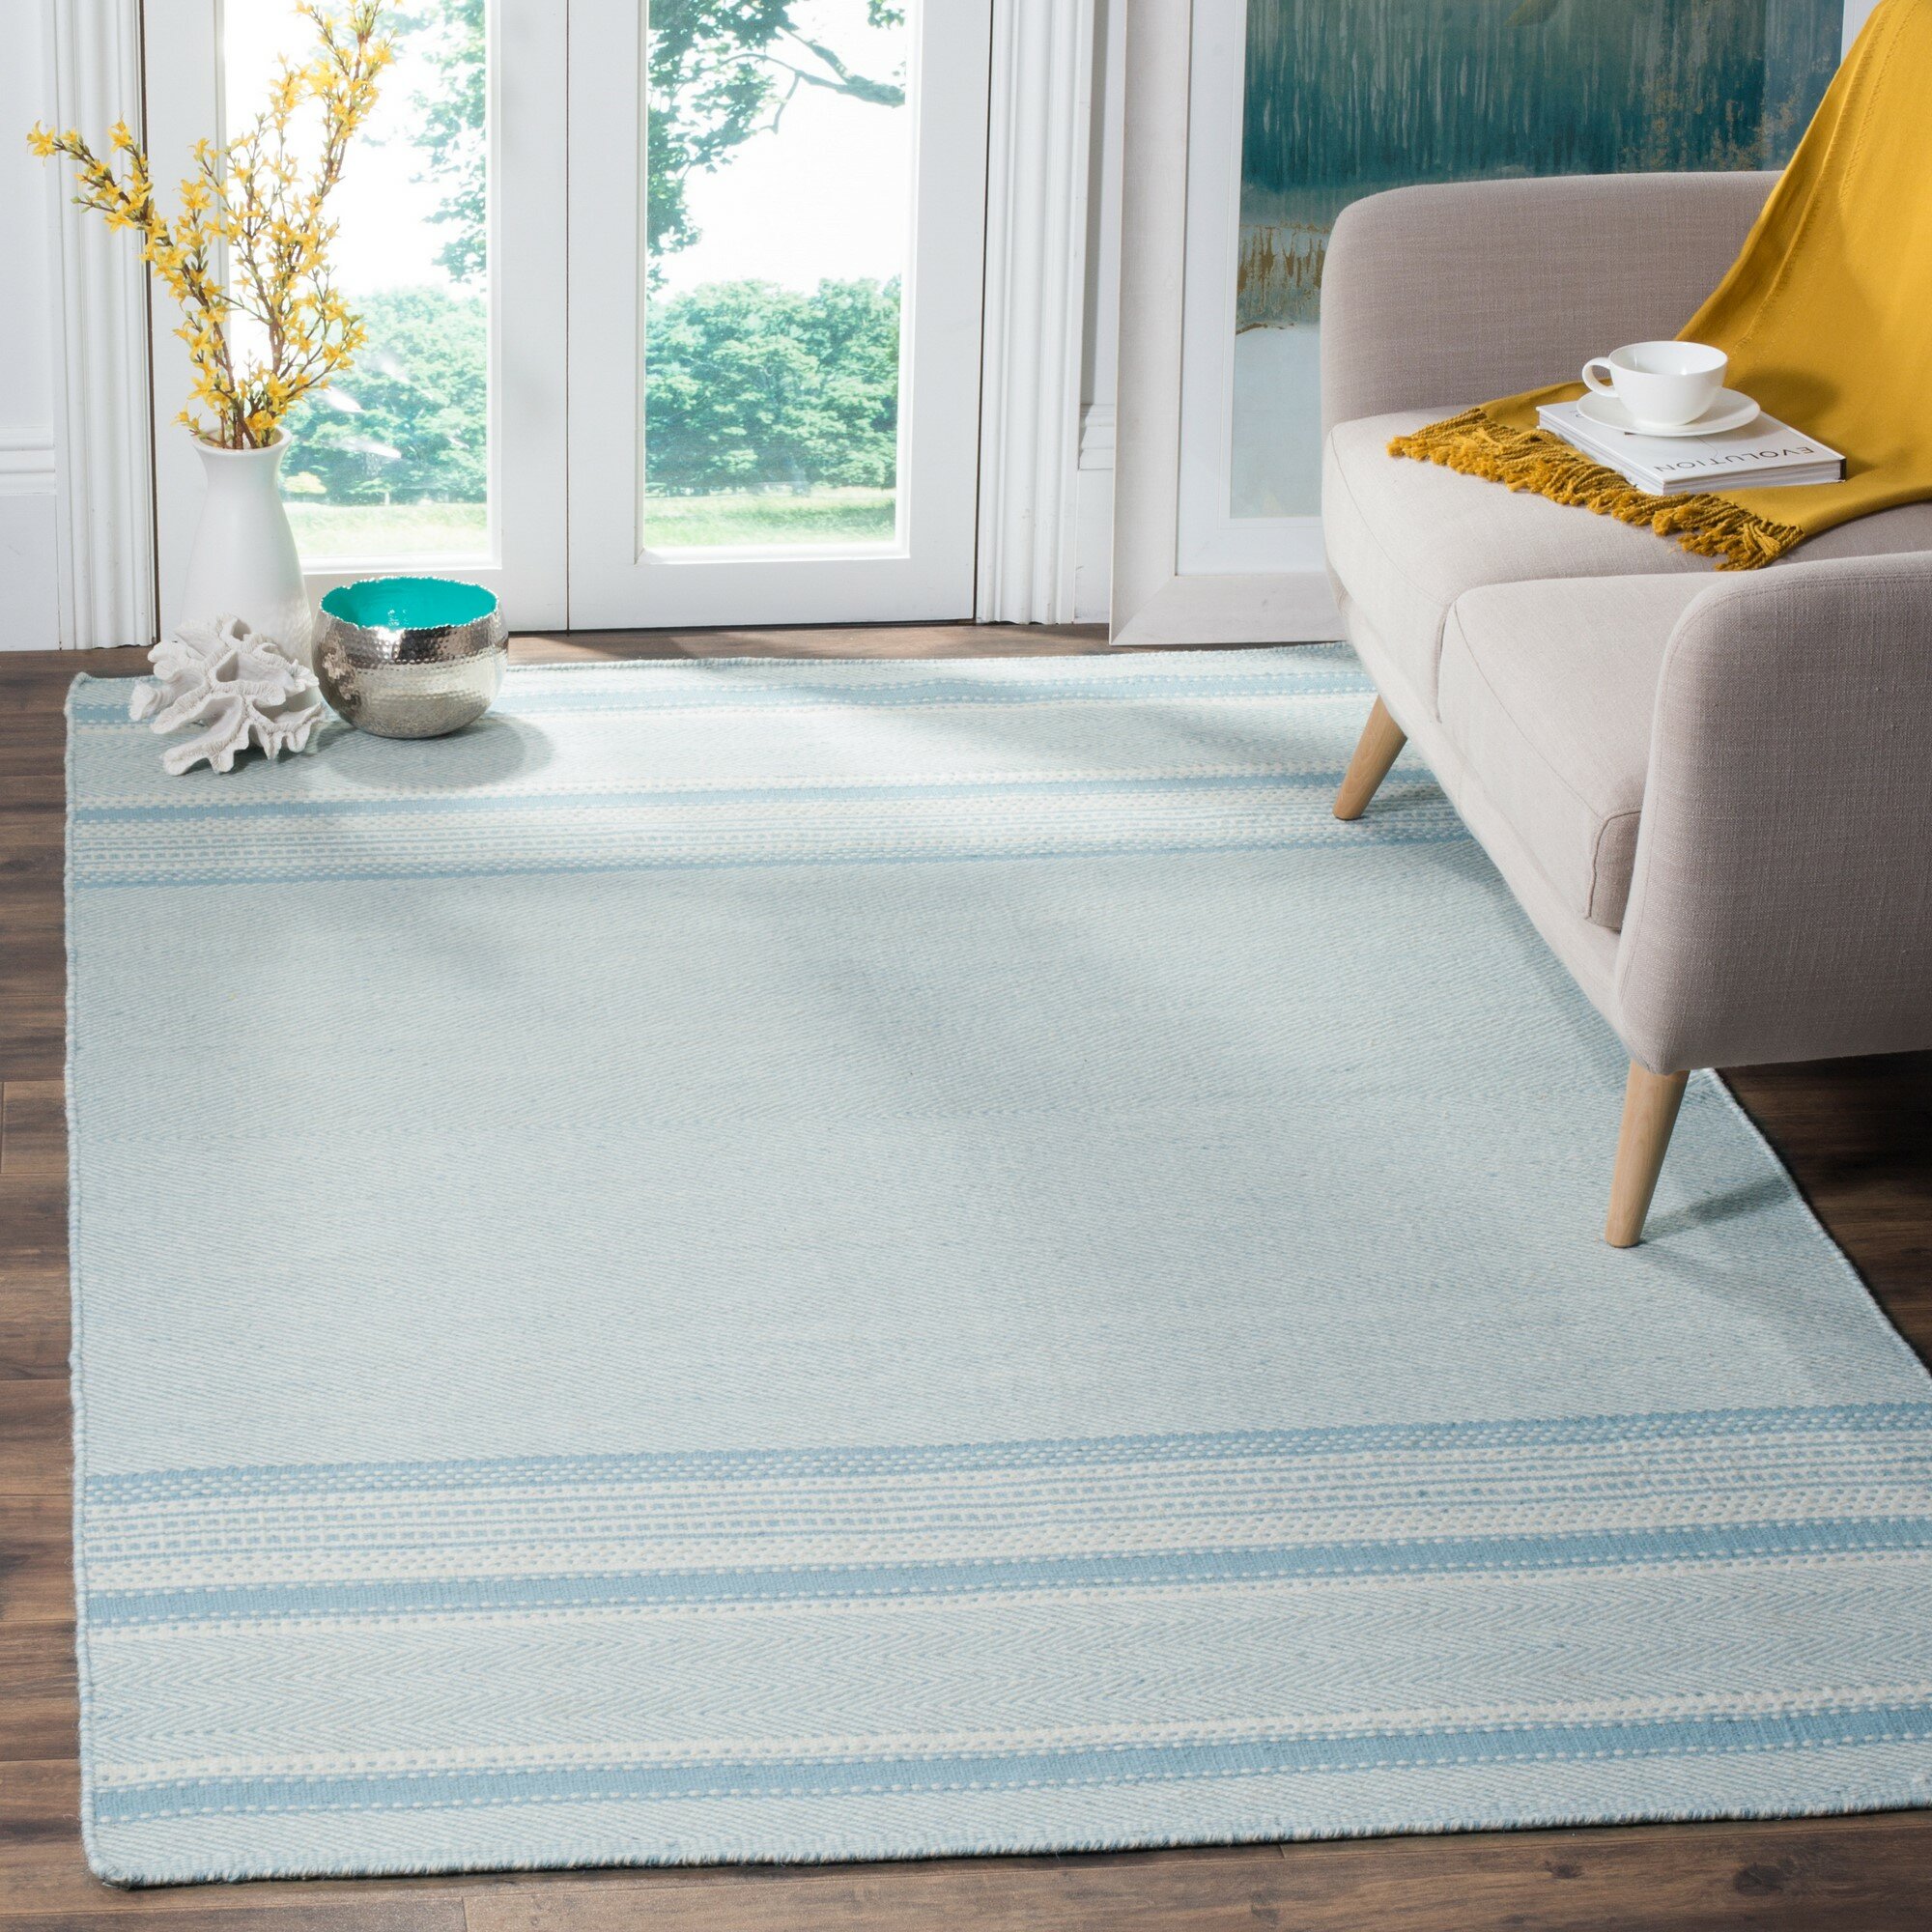 New 100% Wool Hand Woven Flat-Weave Modern Dhurrie Oriental Area Rug Carpet 4x6 